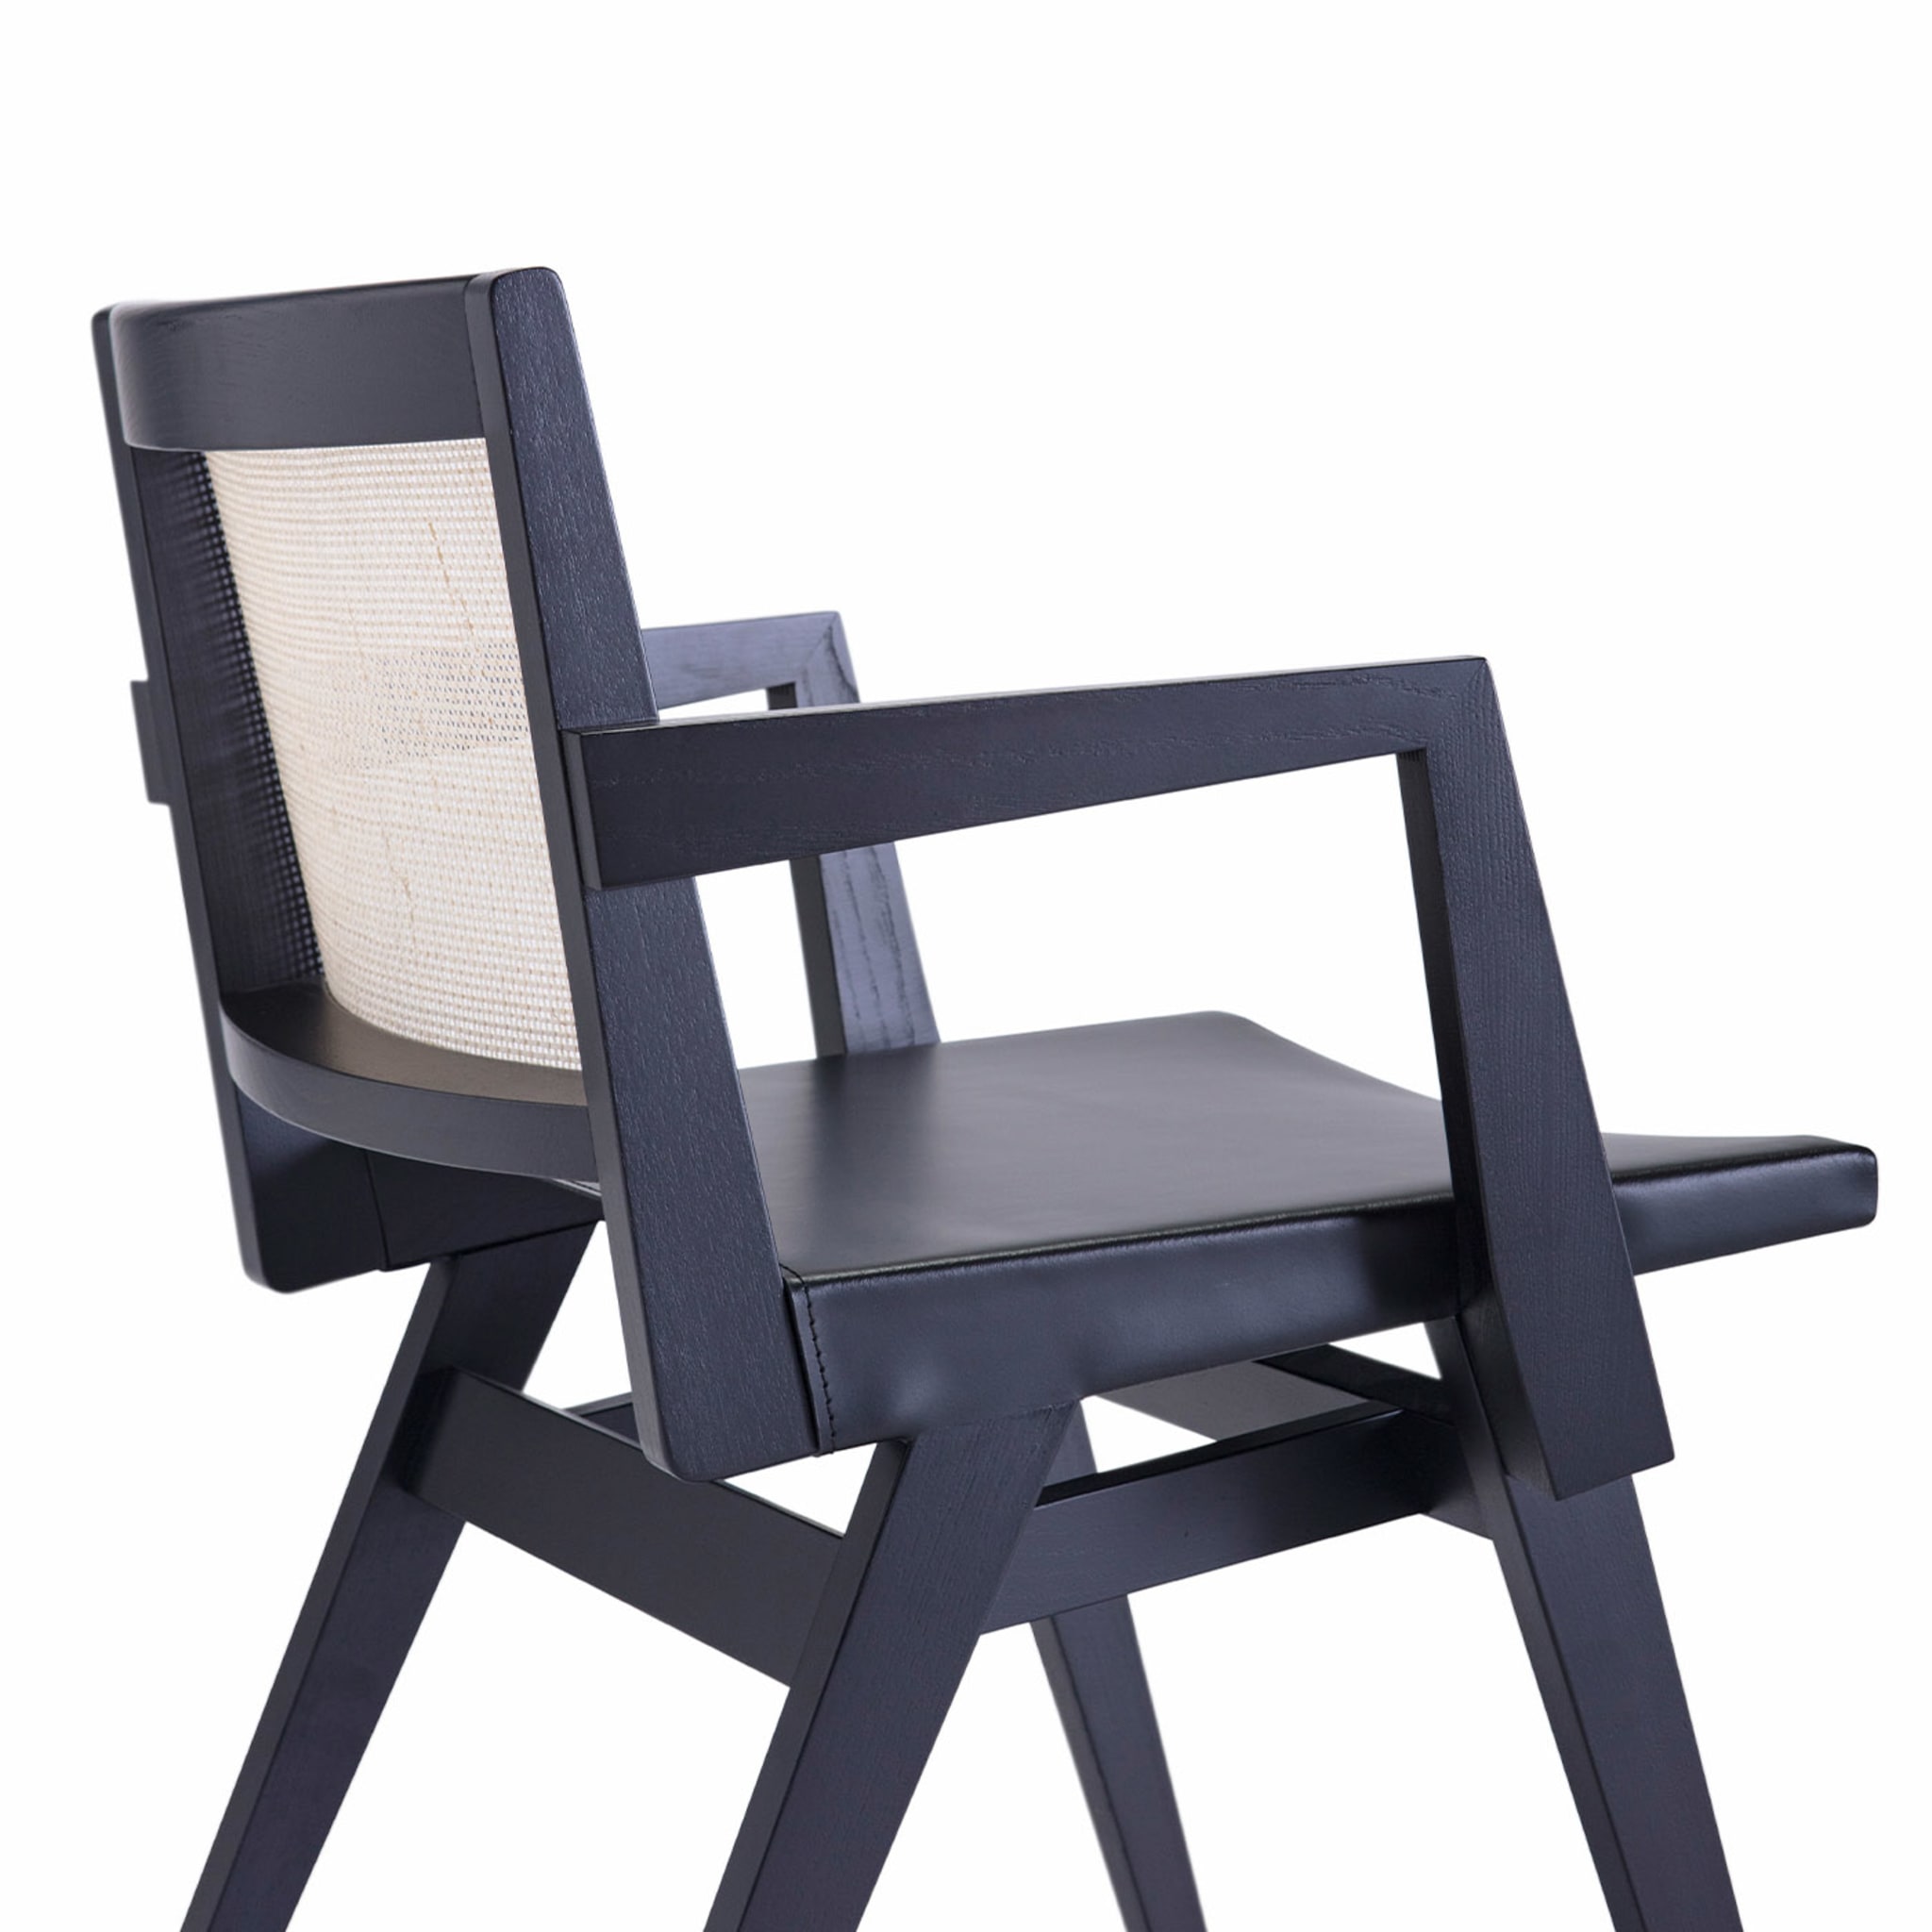 Dorothea/P Black Chair - Alternative view 3